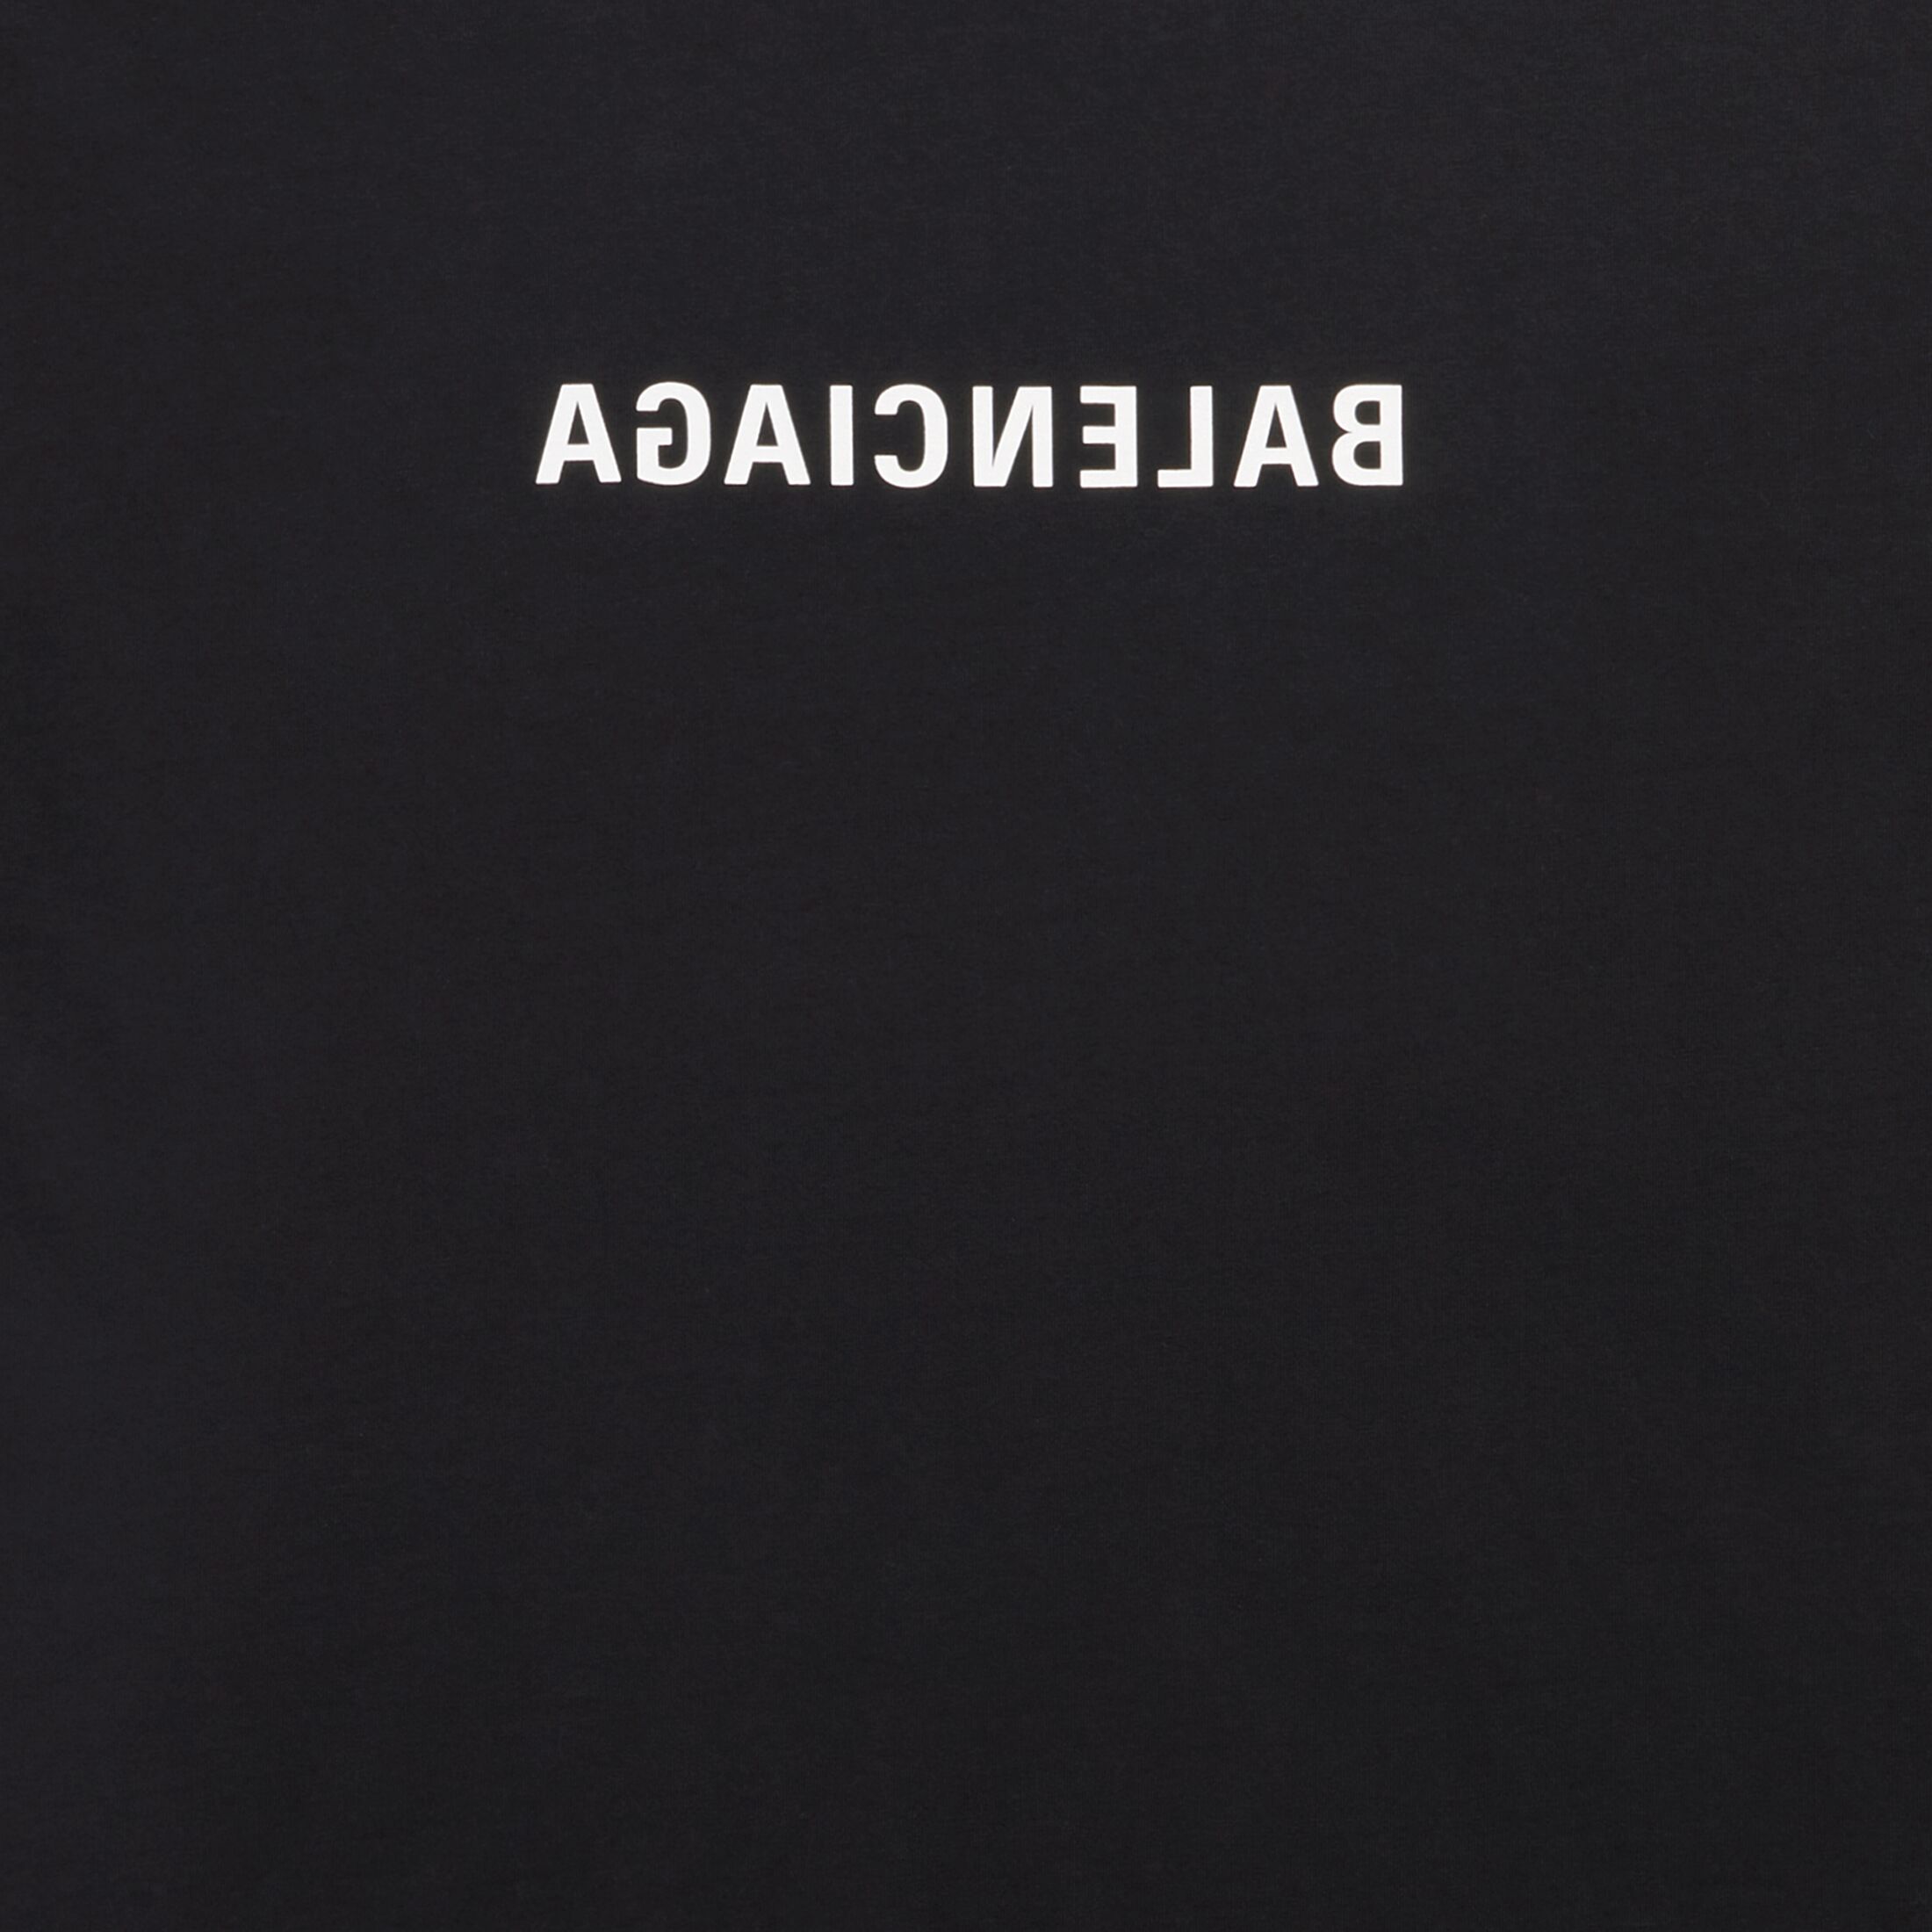 Mirror Balenciaga T-shirt Medium Fit in Black | Balenciaga US